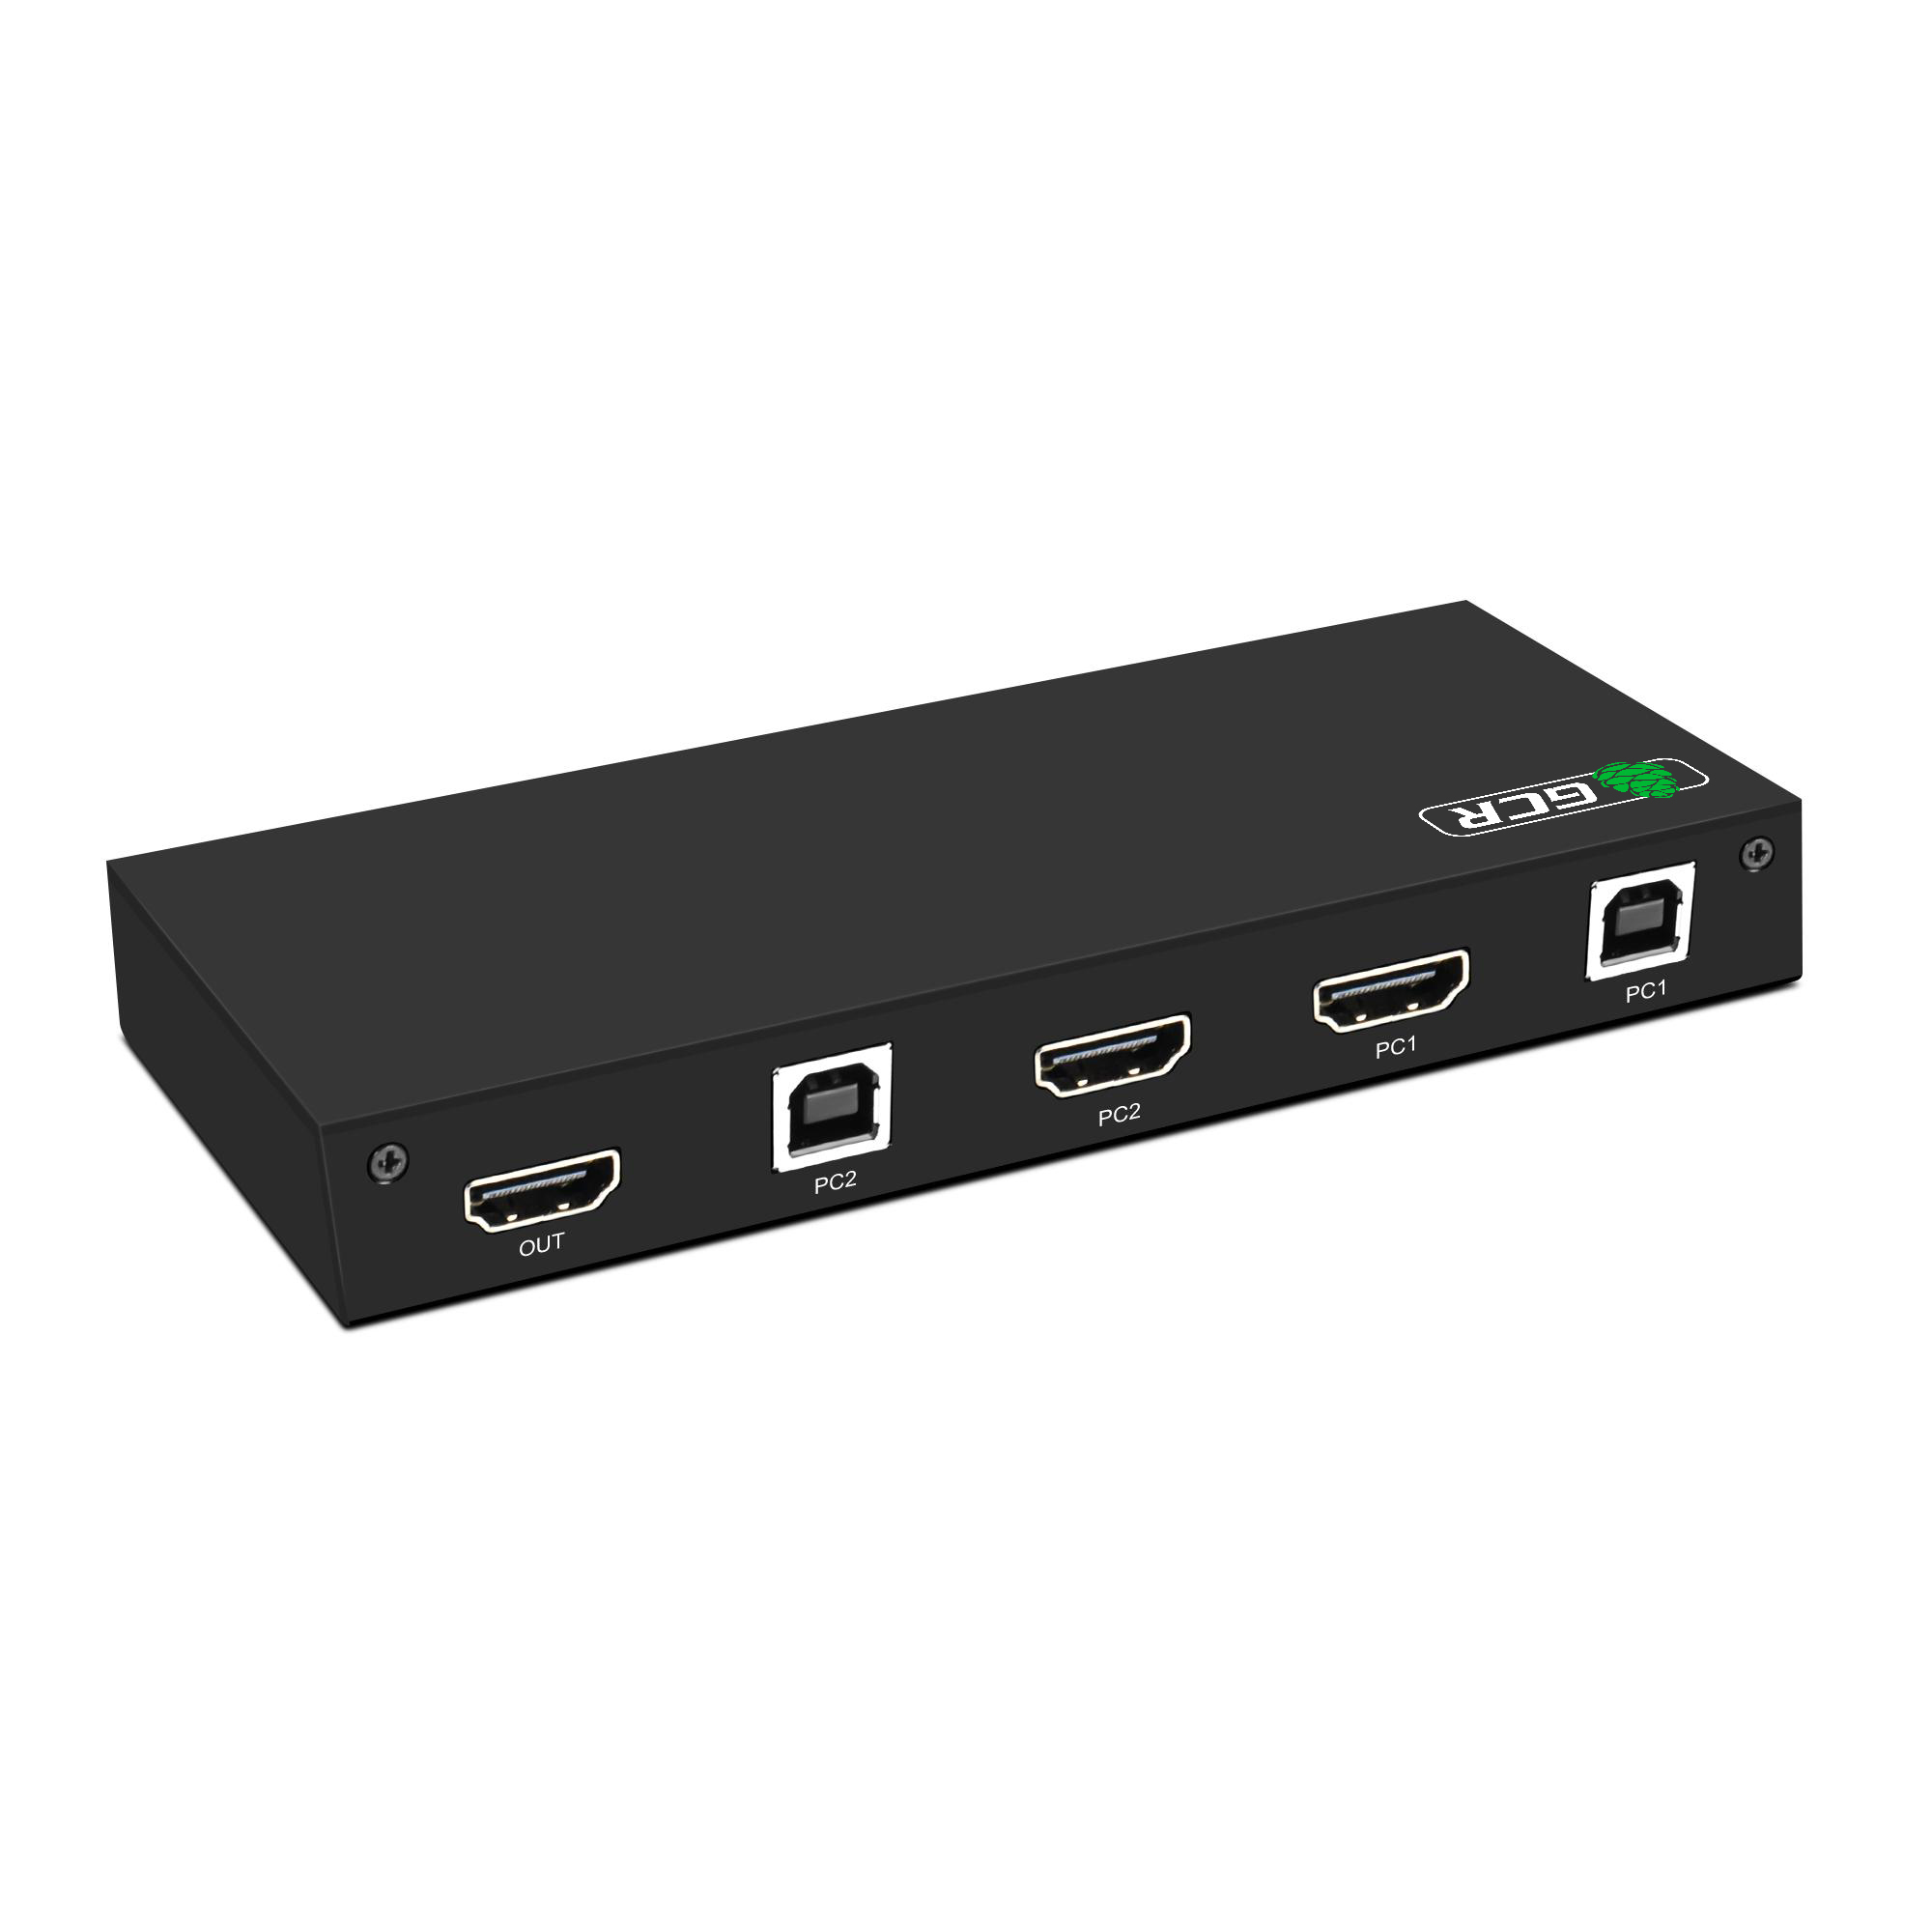 KVM-переключатель HDMI 2x1 4K 3-порта USB 2 компьютера к 1 монитору, мыши, клавиатуре